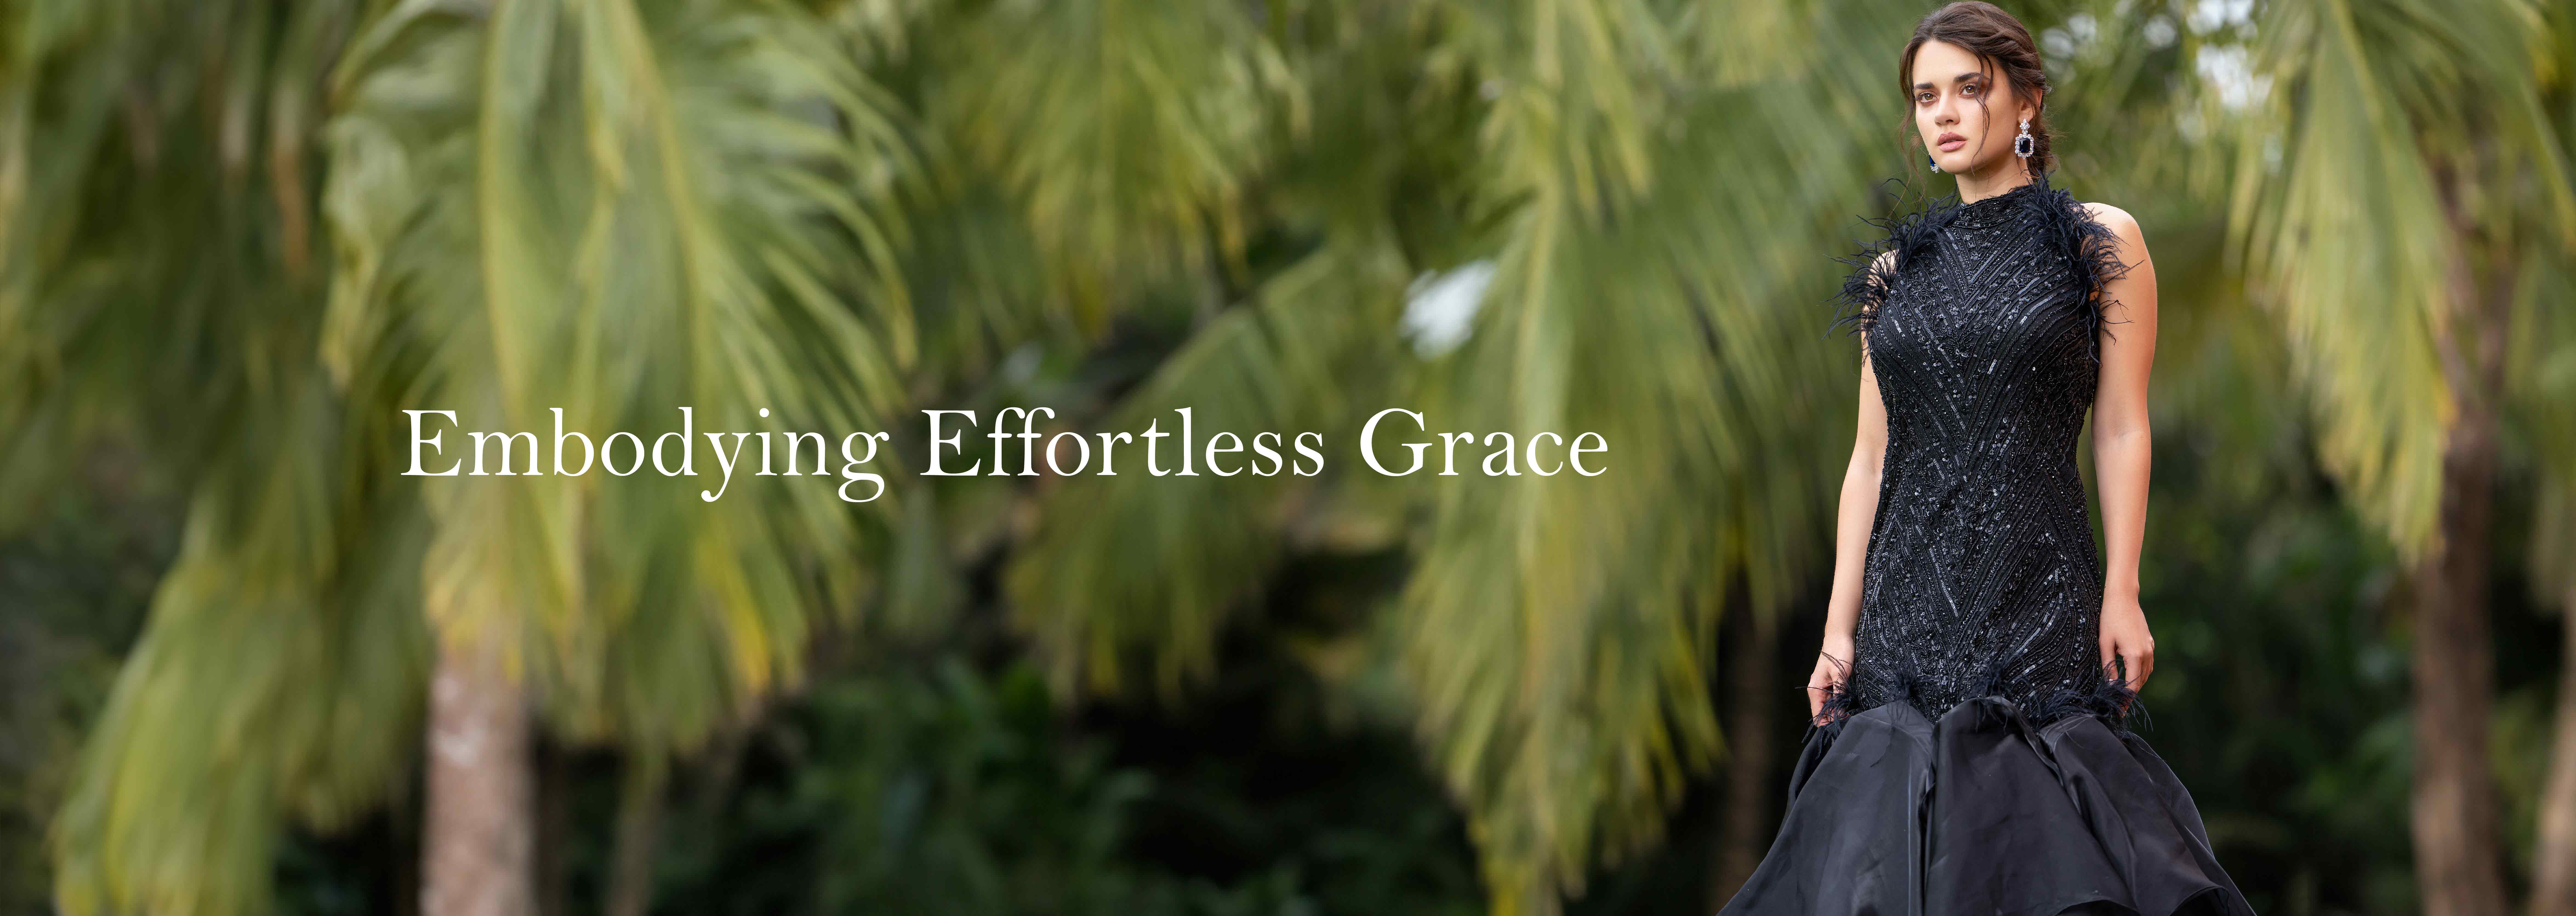 embodying effortless grace